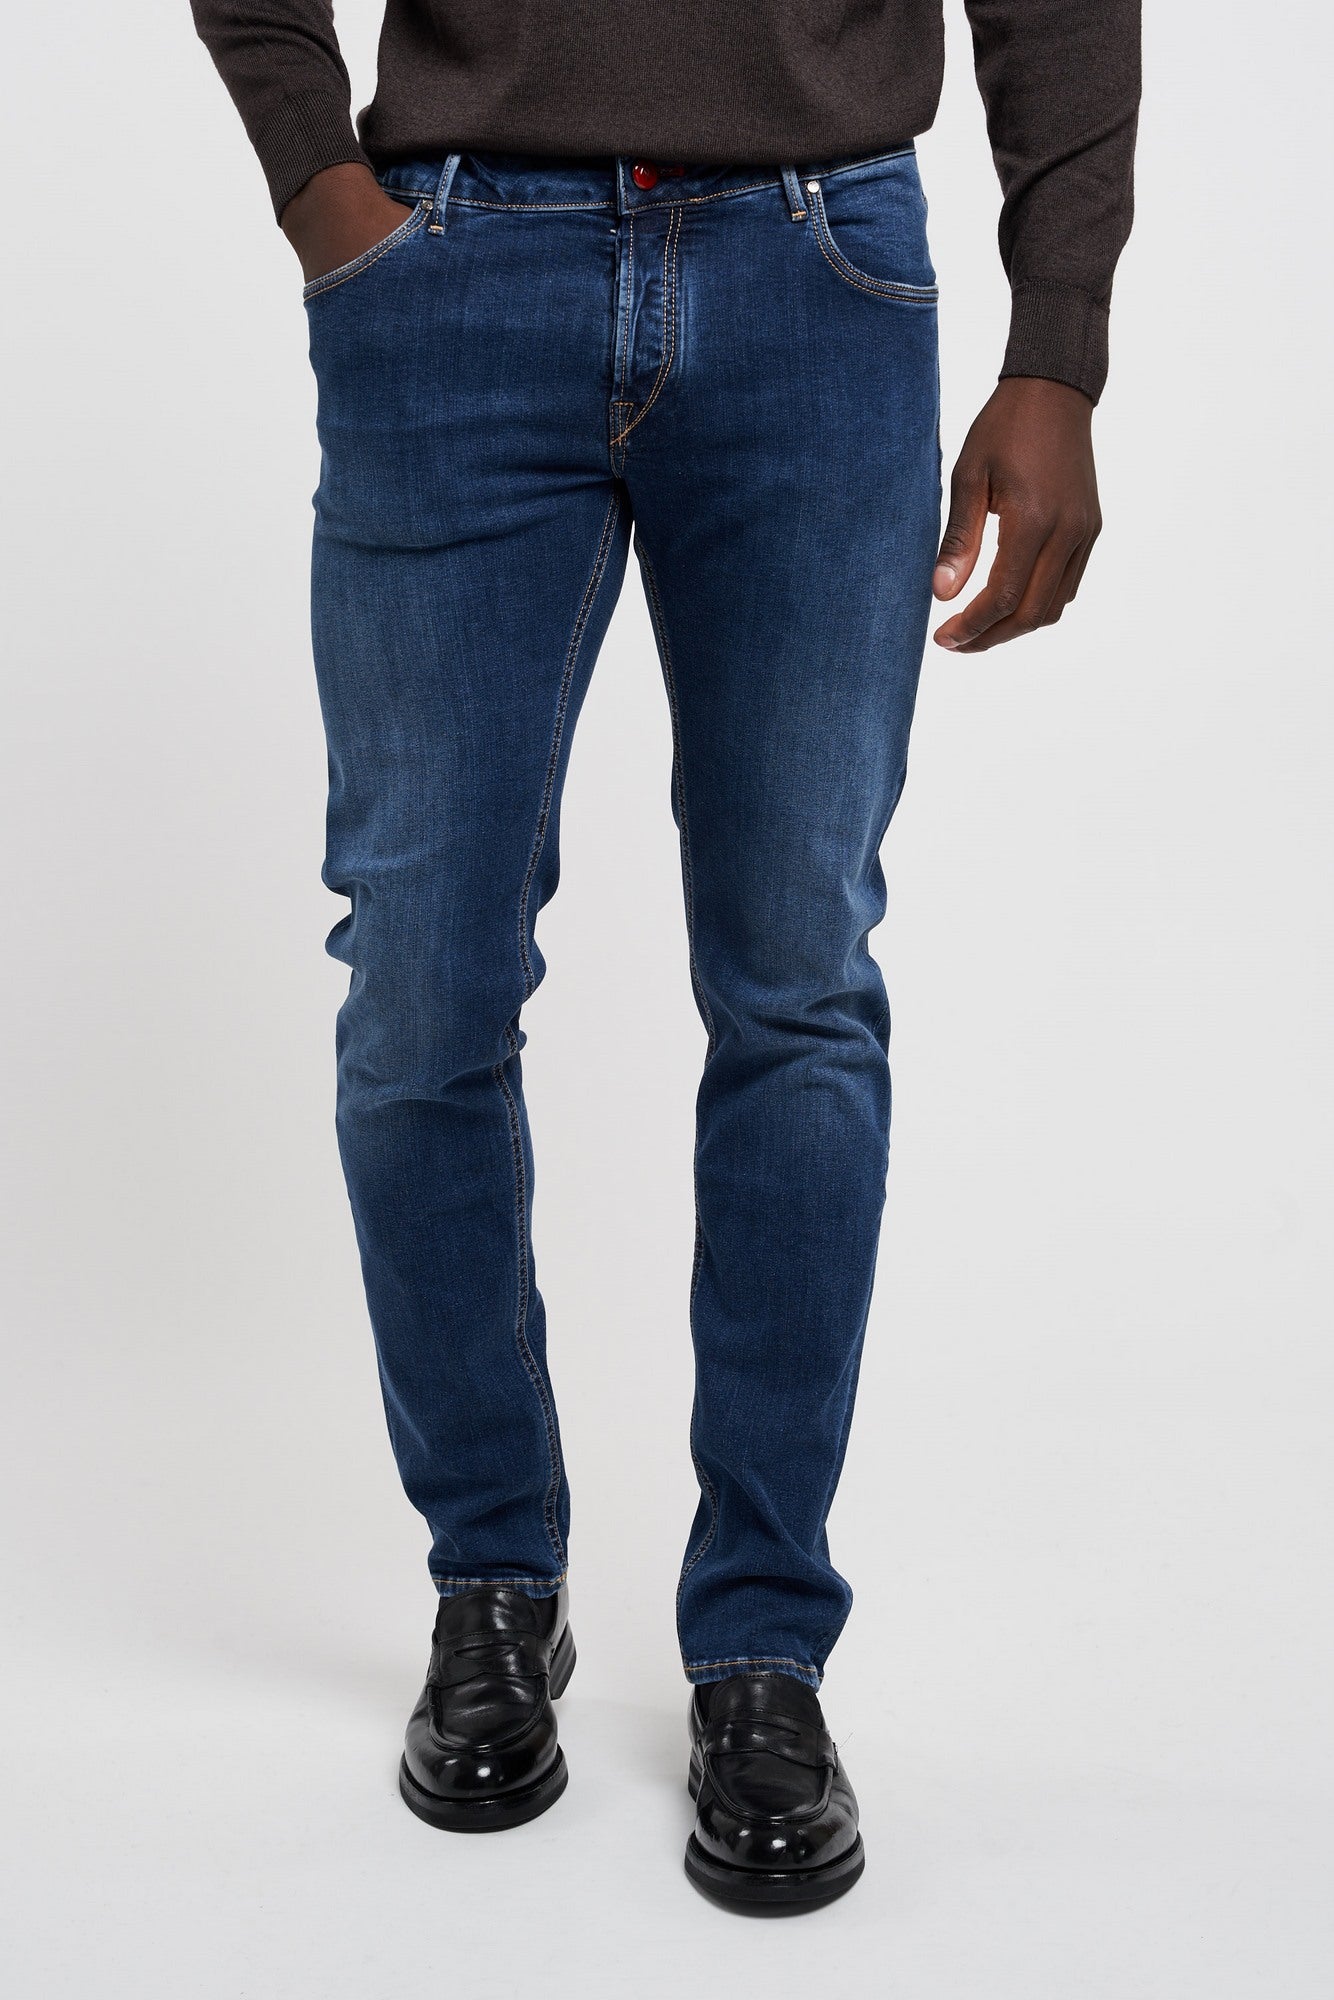 Handpicked Jeans Orvieto in Blue Cotton-1